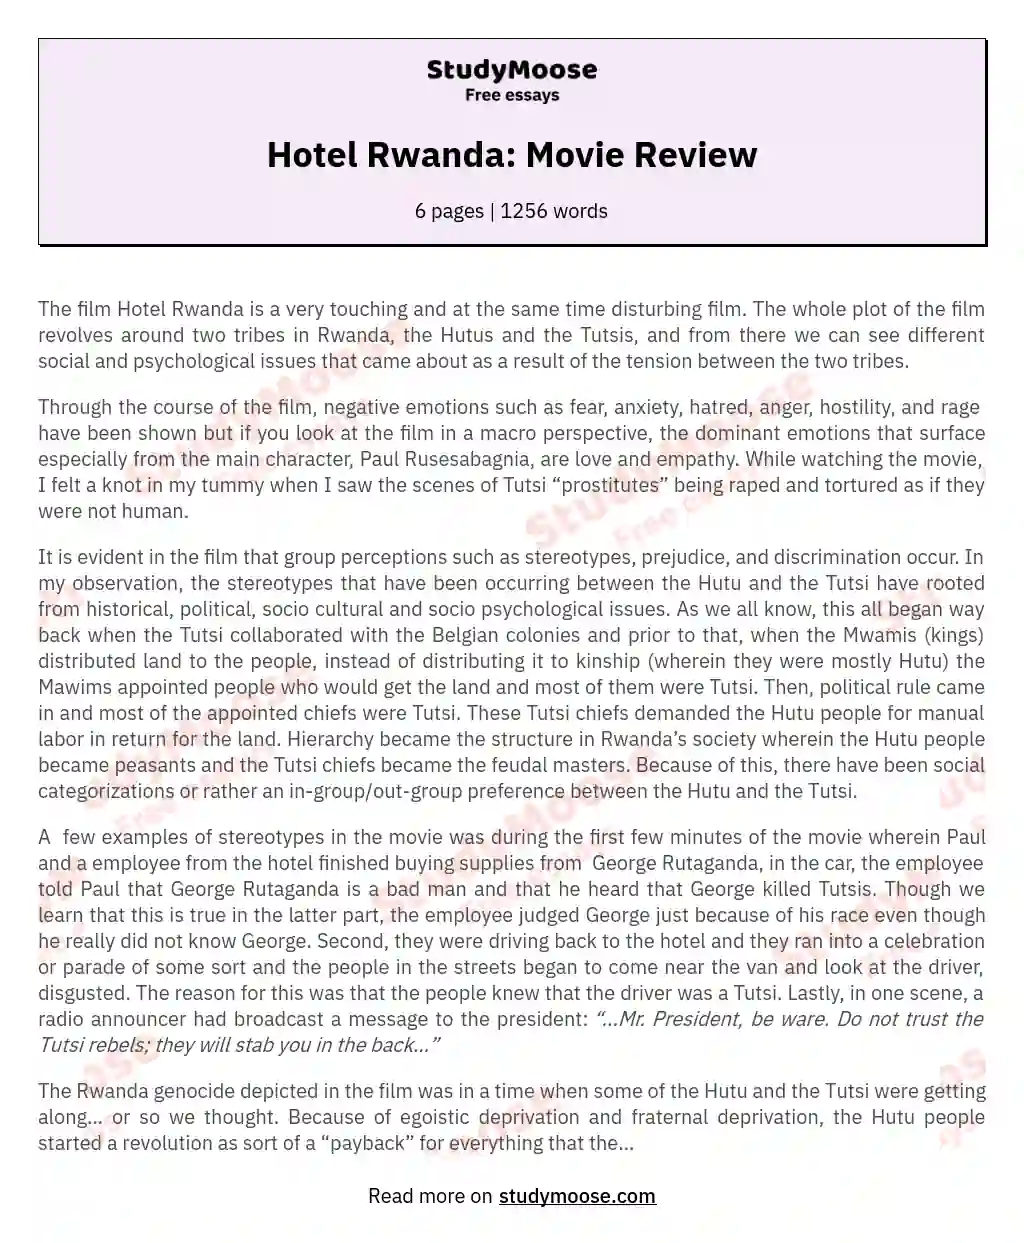 Hotel Rwanda: Movie Review essay